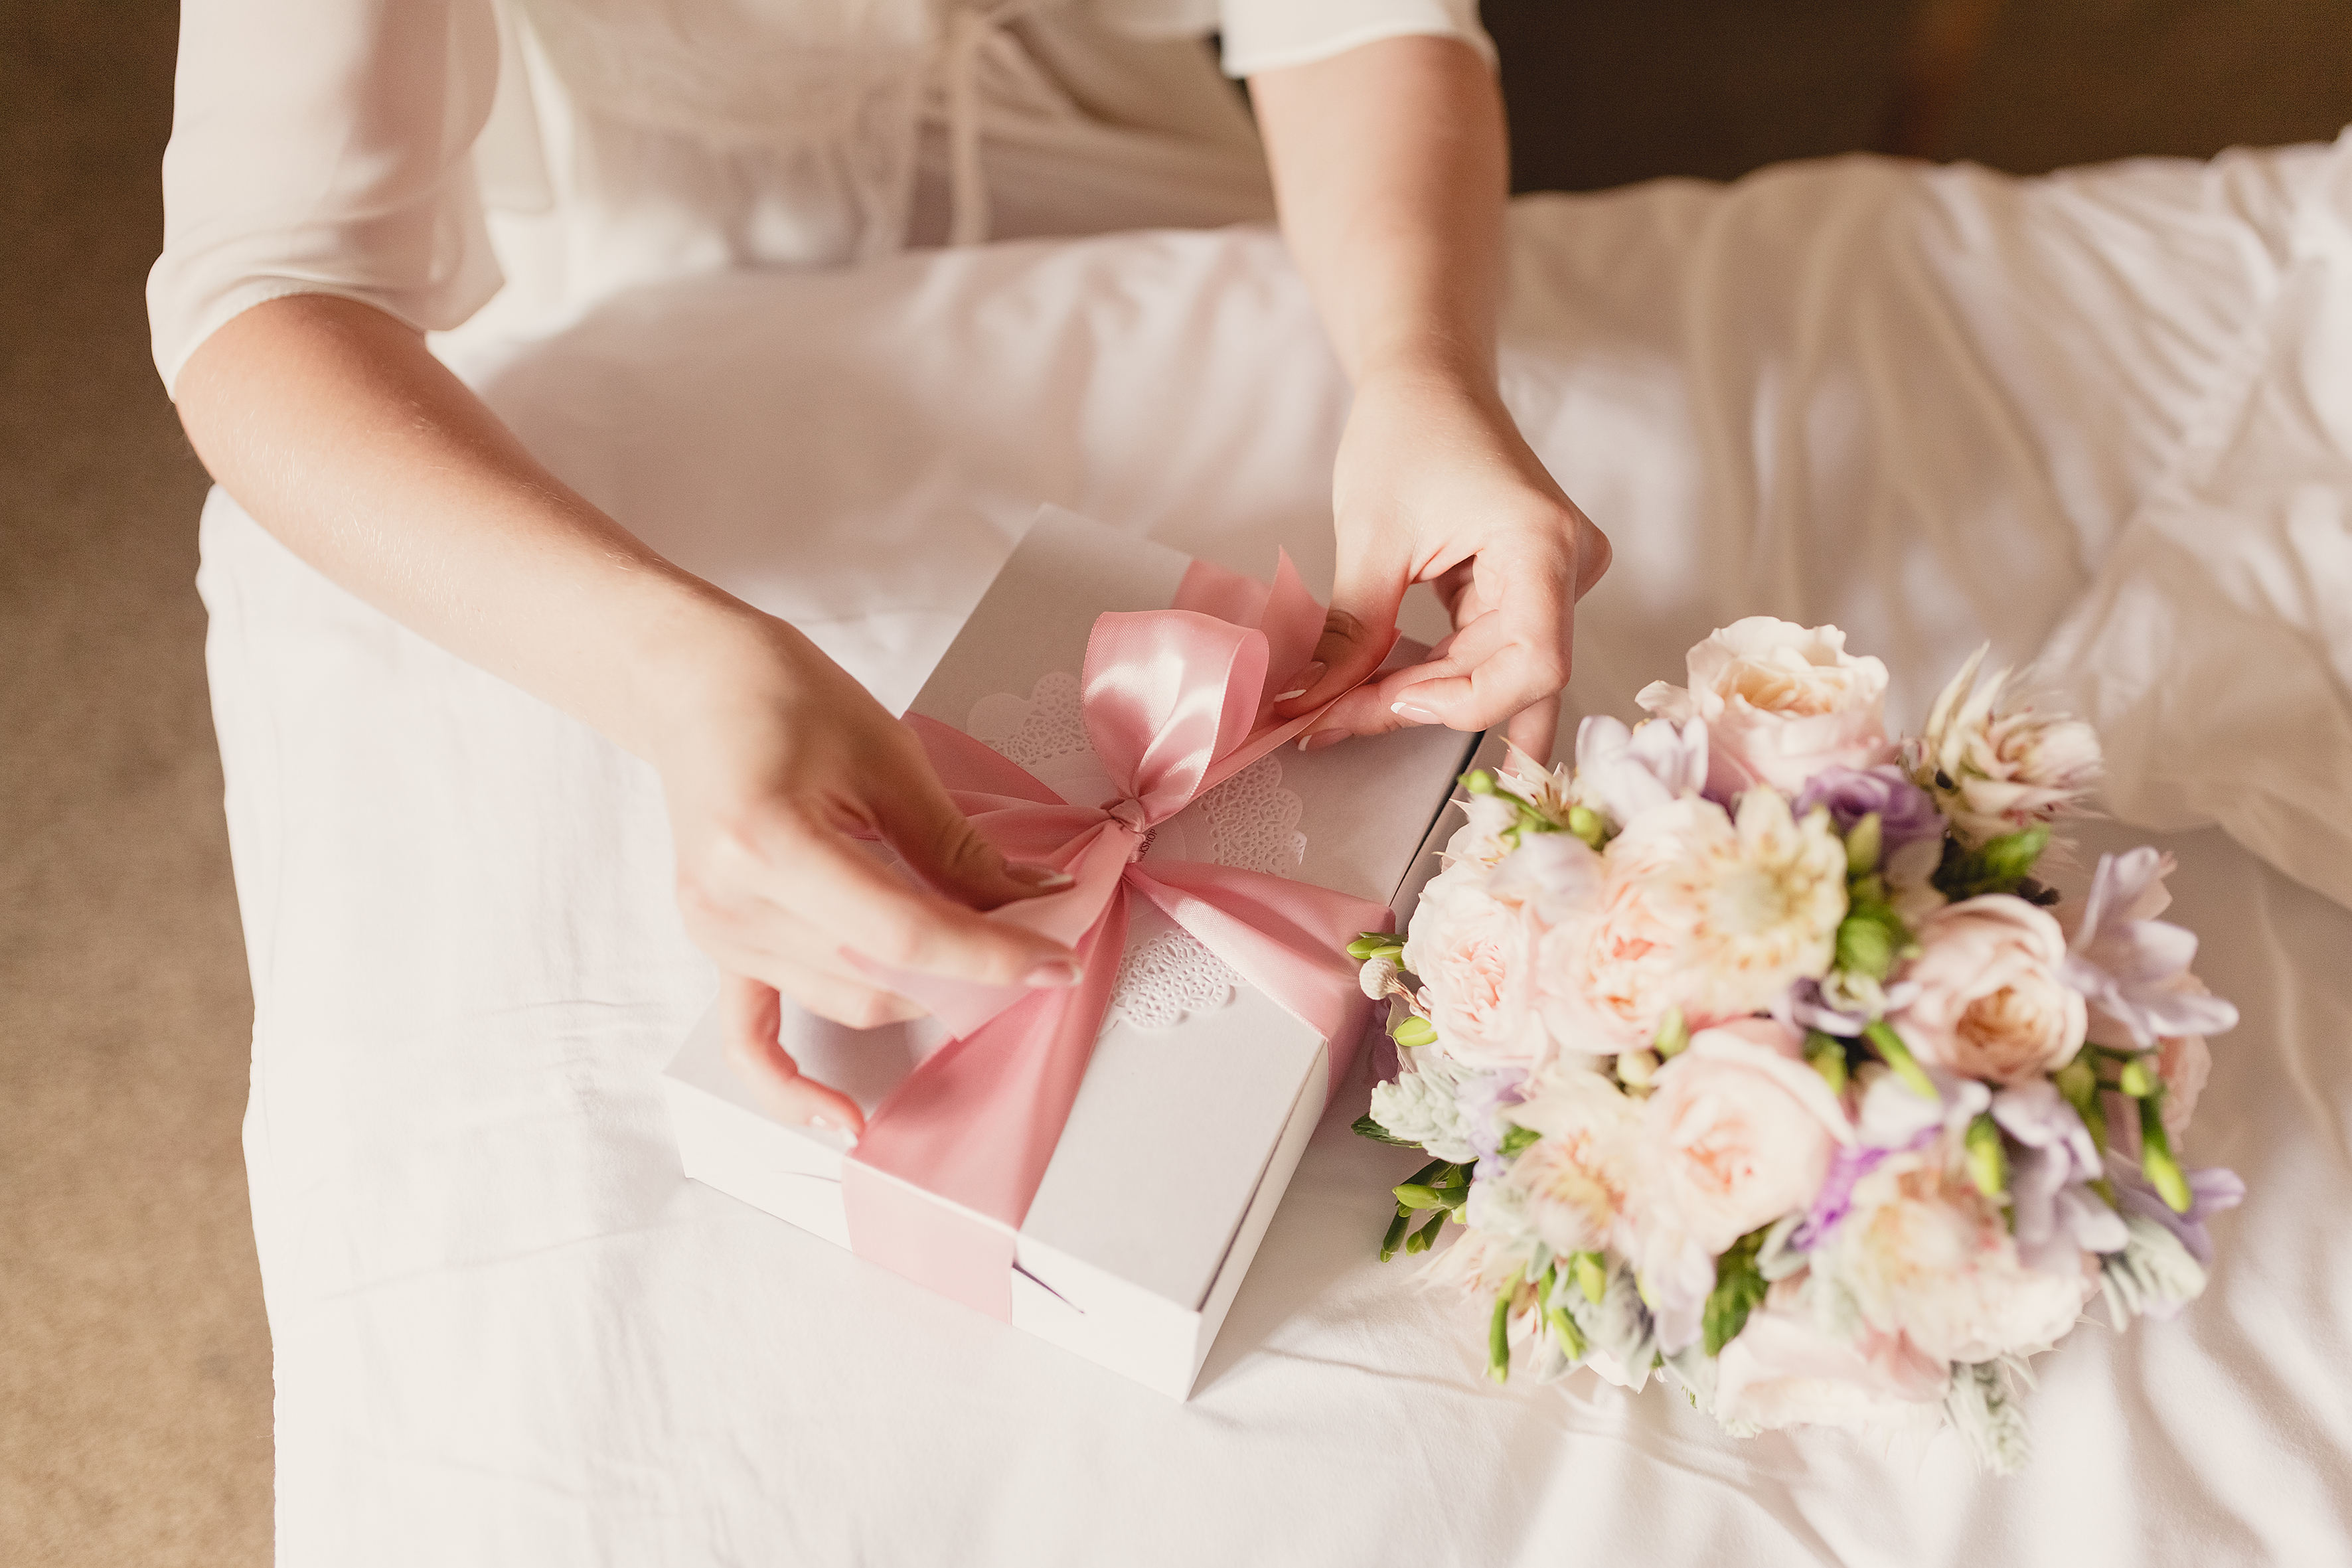 Bride opening her present box | Source: Shutterstock